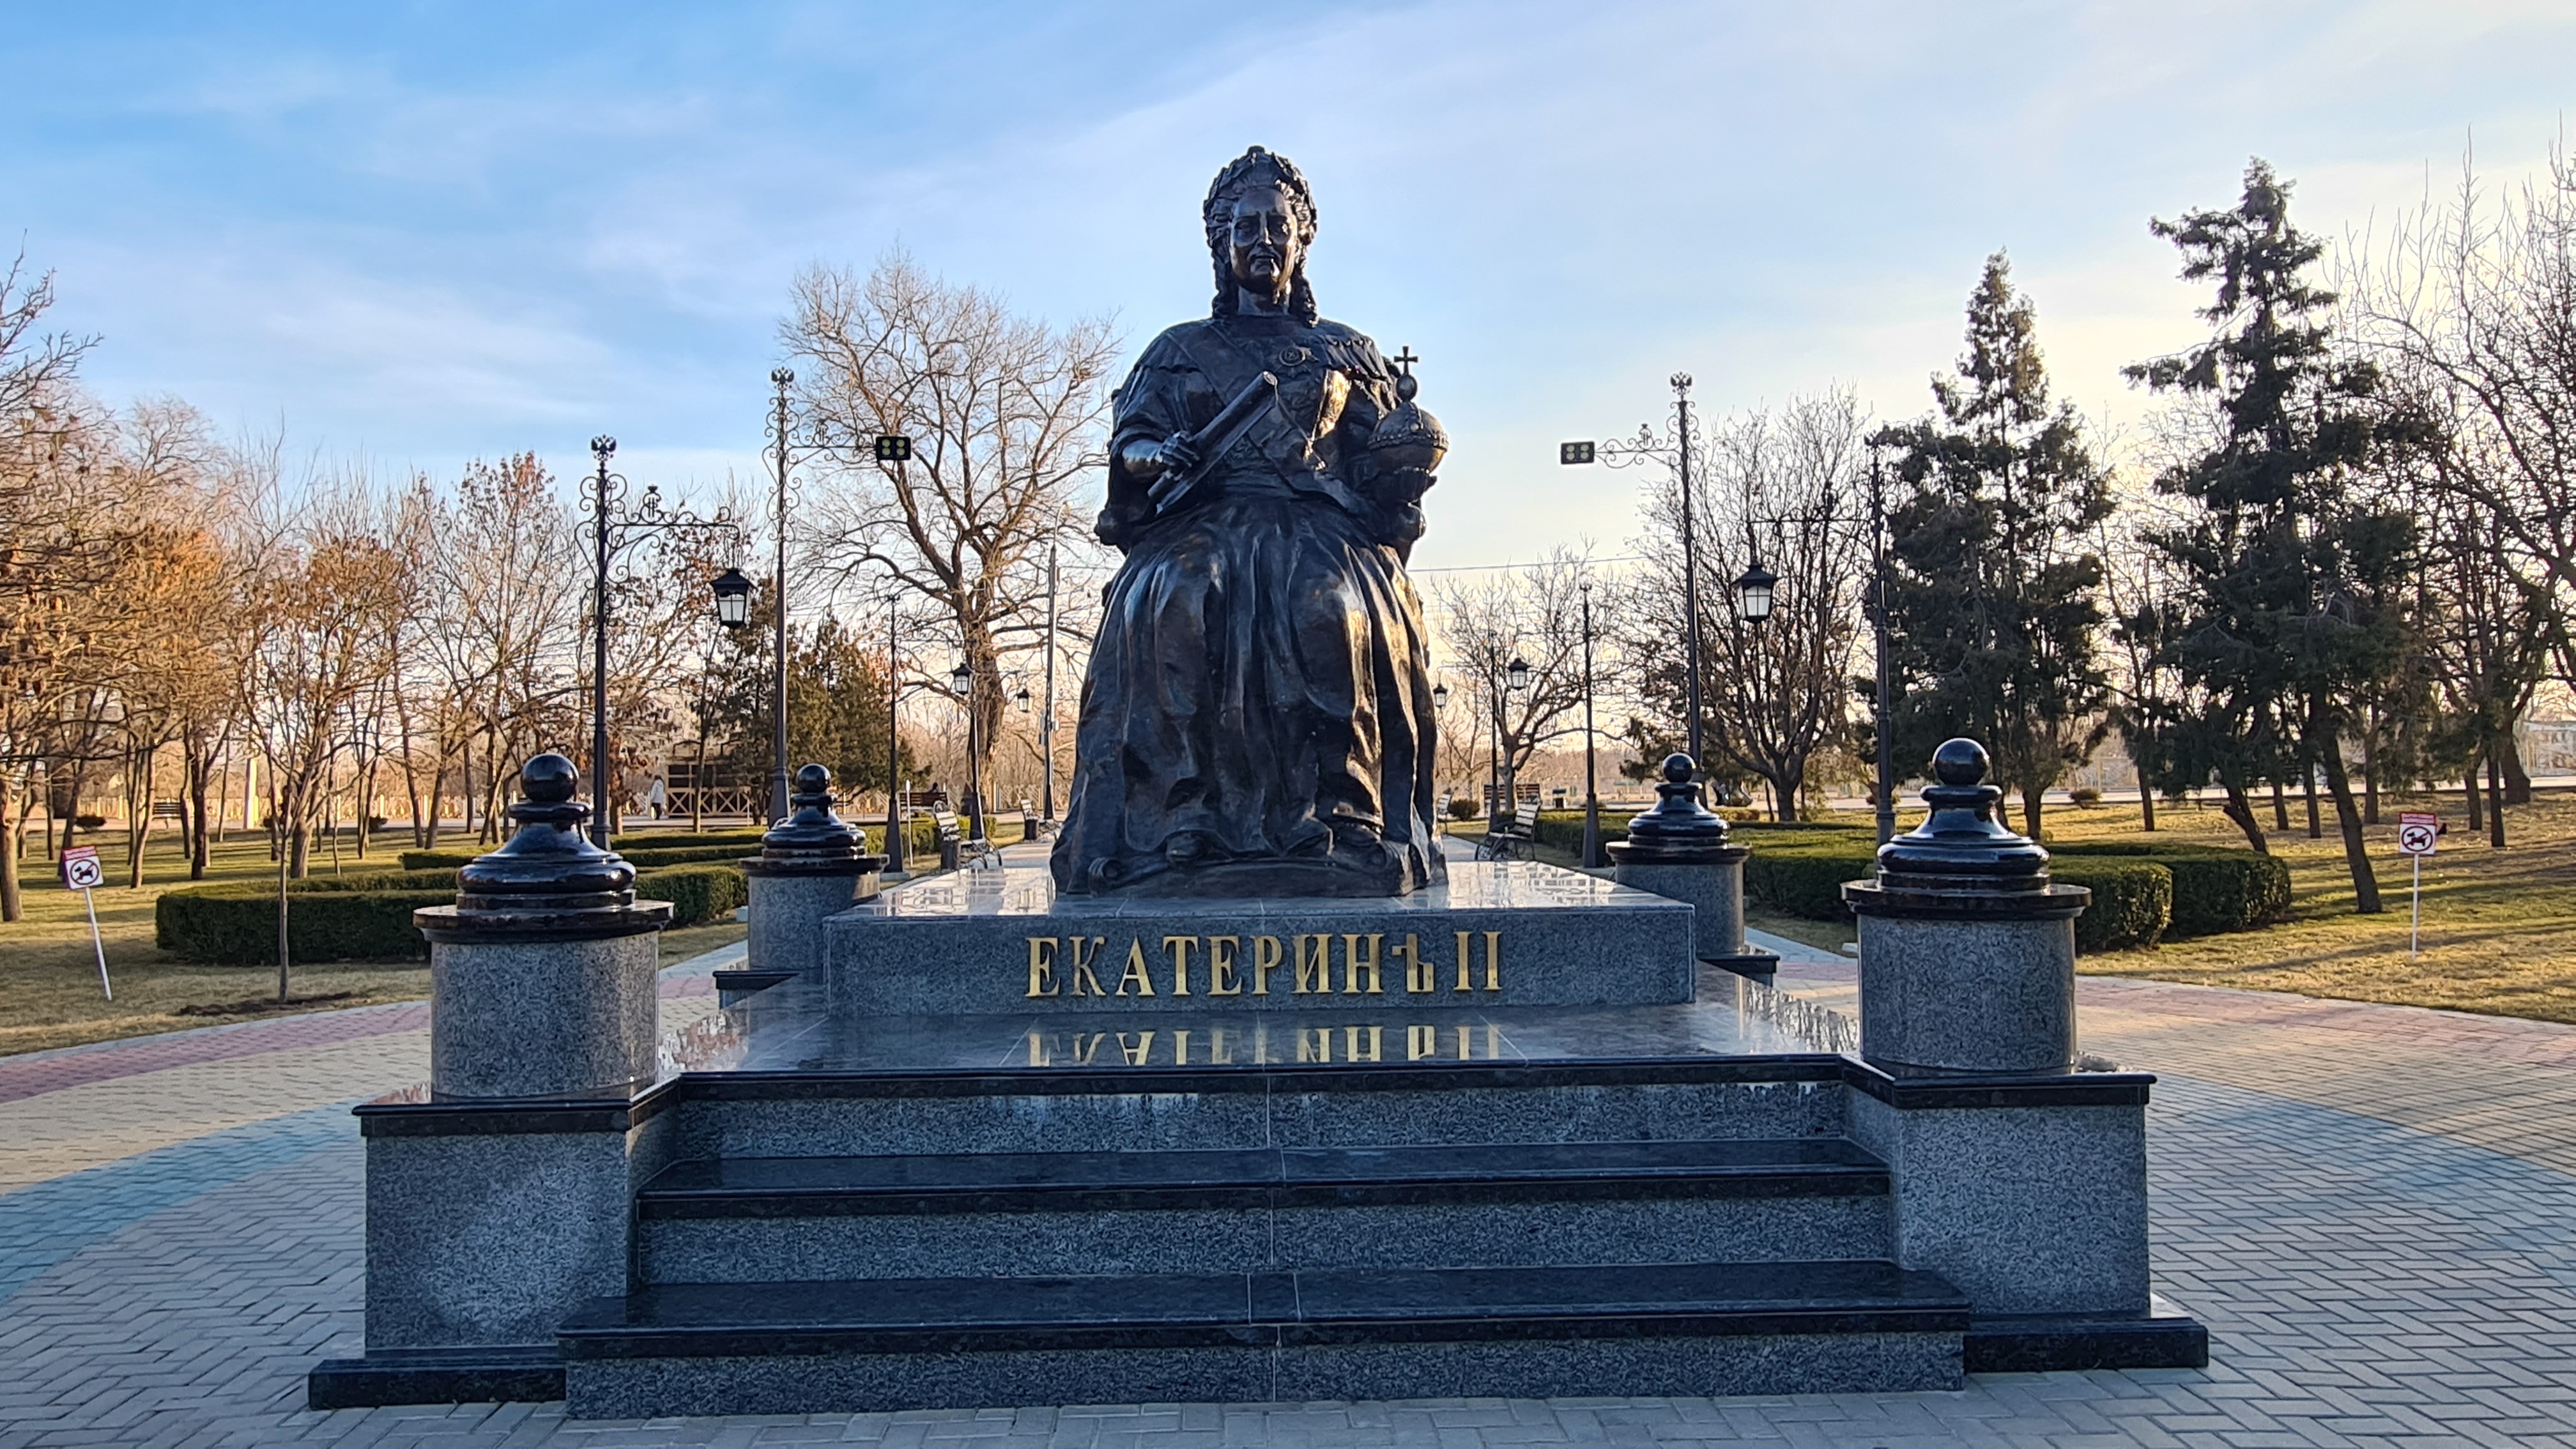 Tiraspol, Moldova – February 13, 2022: Monument to Catherine the Great in Tiraspol, Transnistria or Moldova